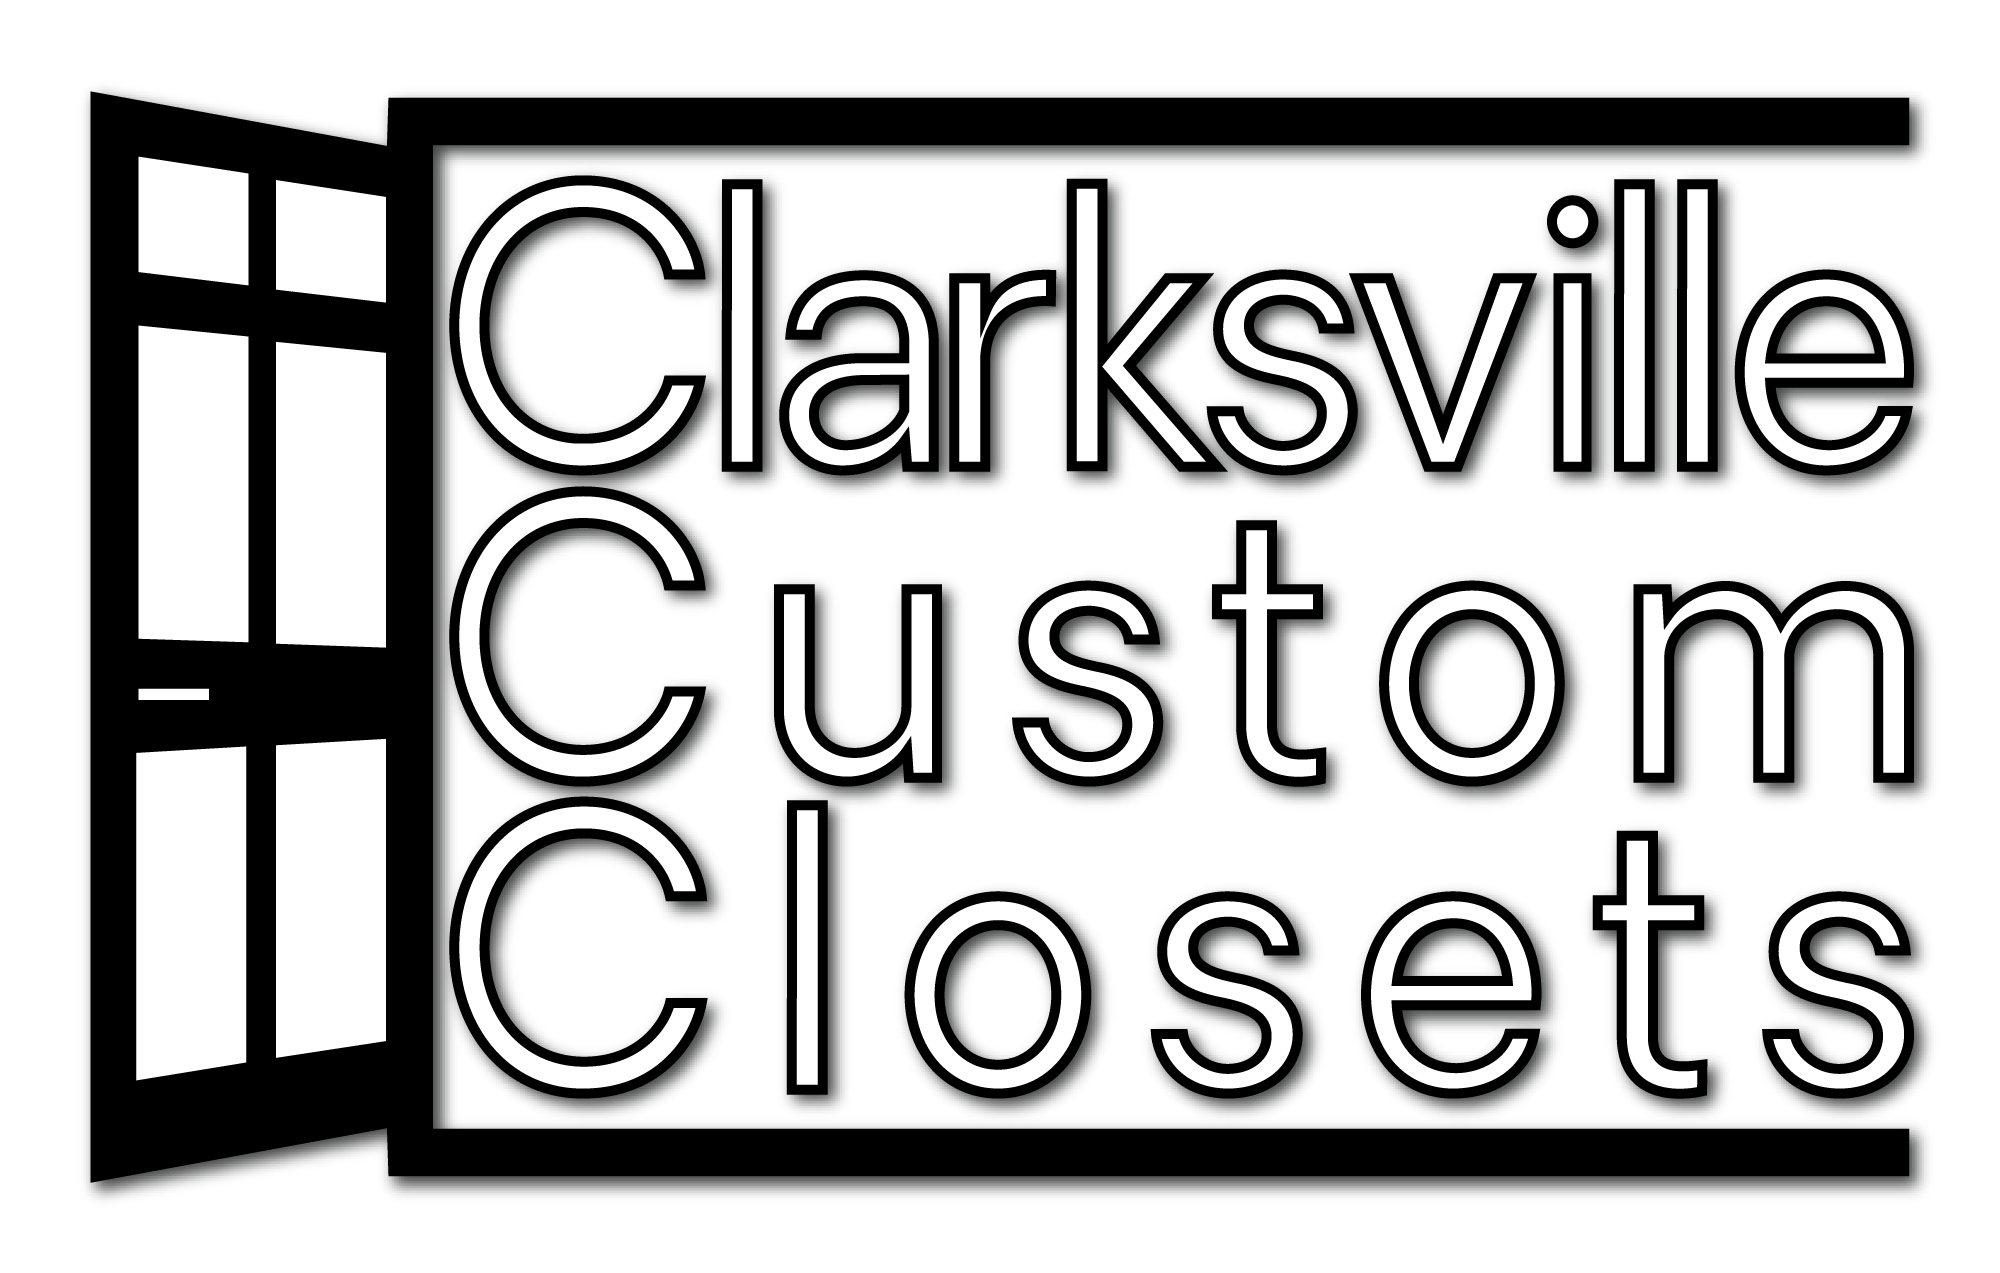 Clarksville Custom Closets